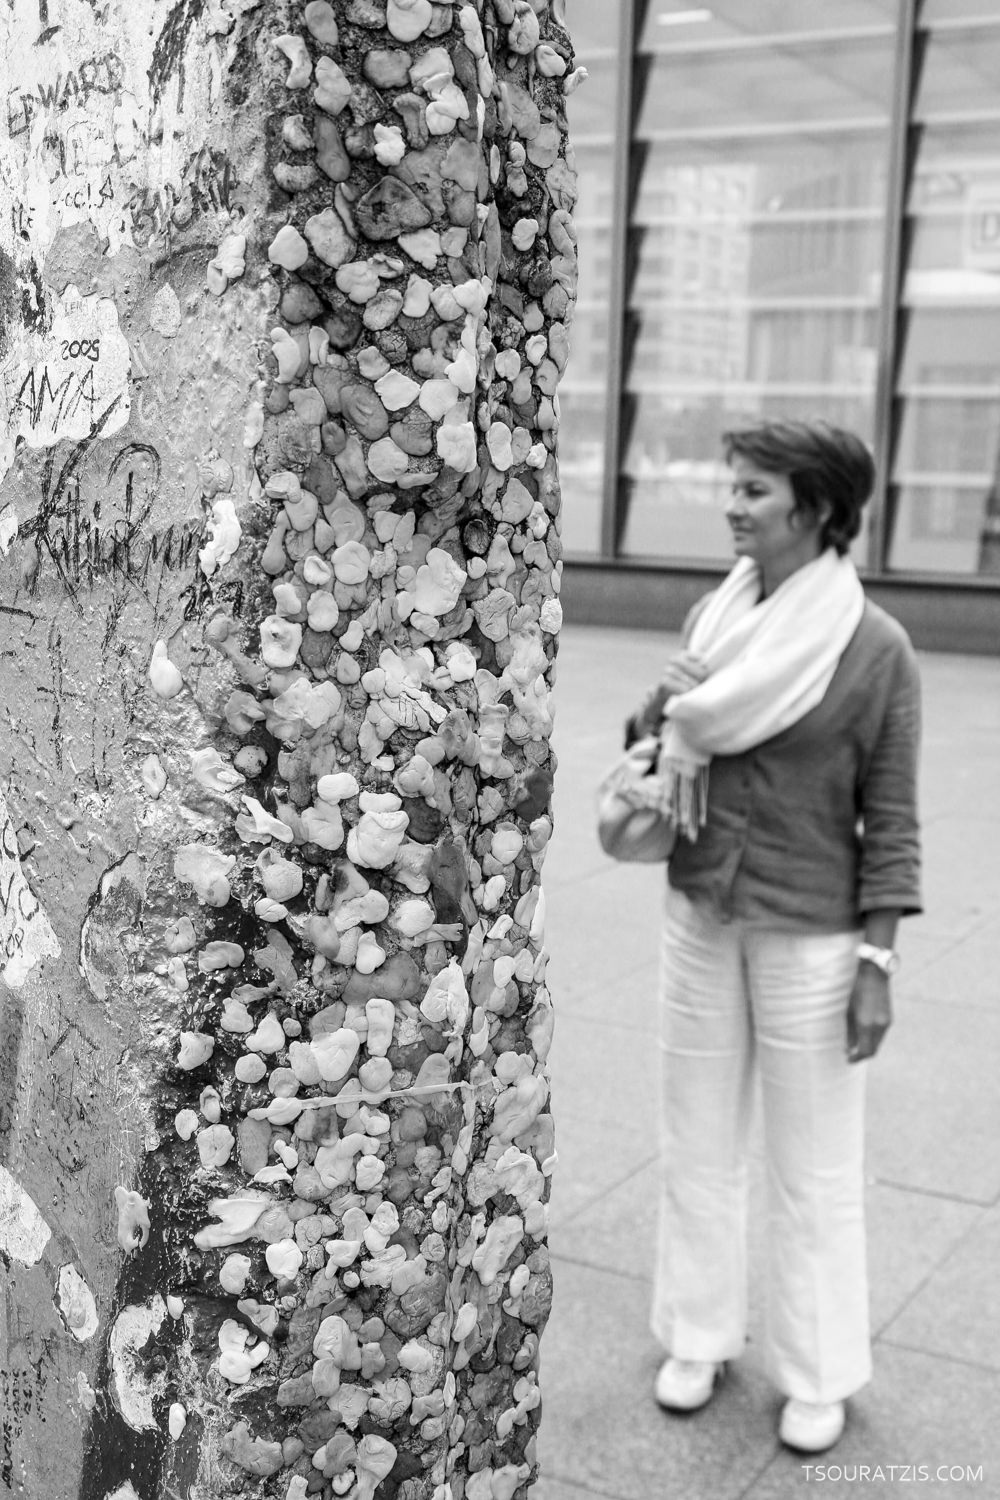 Chewing gums stuck on Berlins wall section Potsdamer Platz Berlin Germany